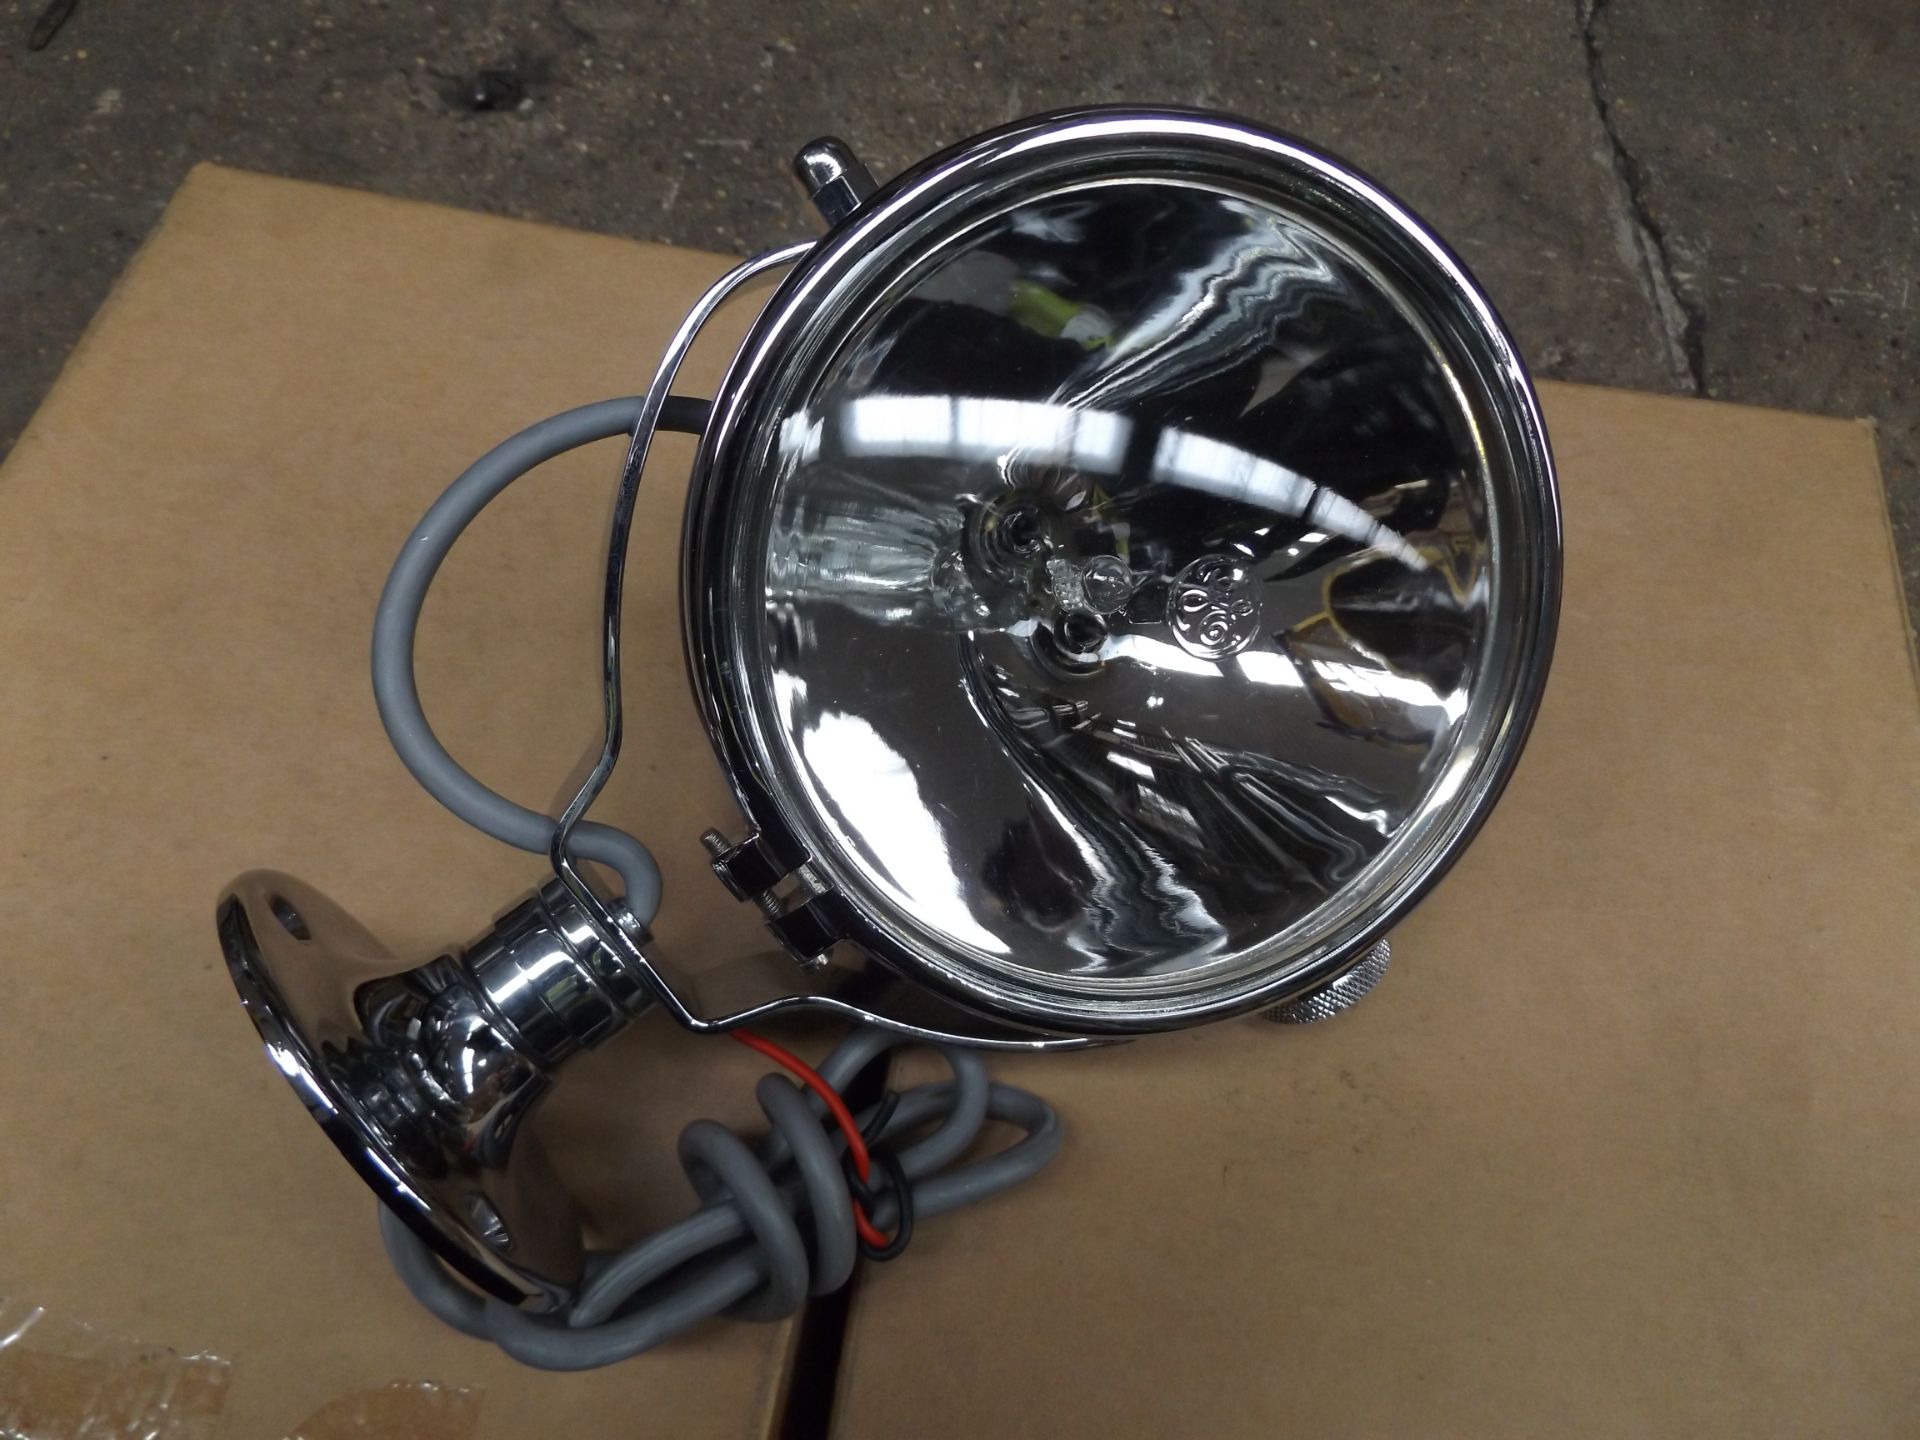 2 x General Electric Halogen Vehicle Spot Lamp Assys